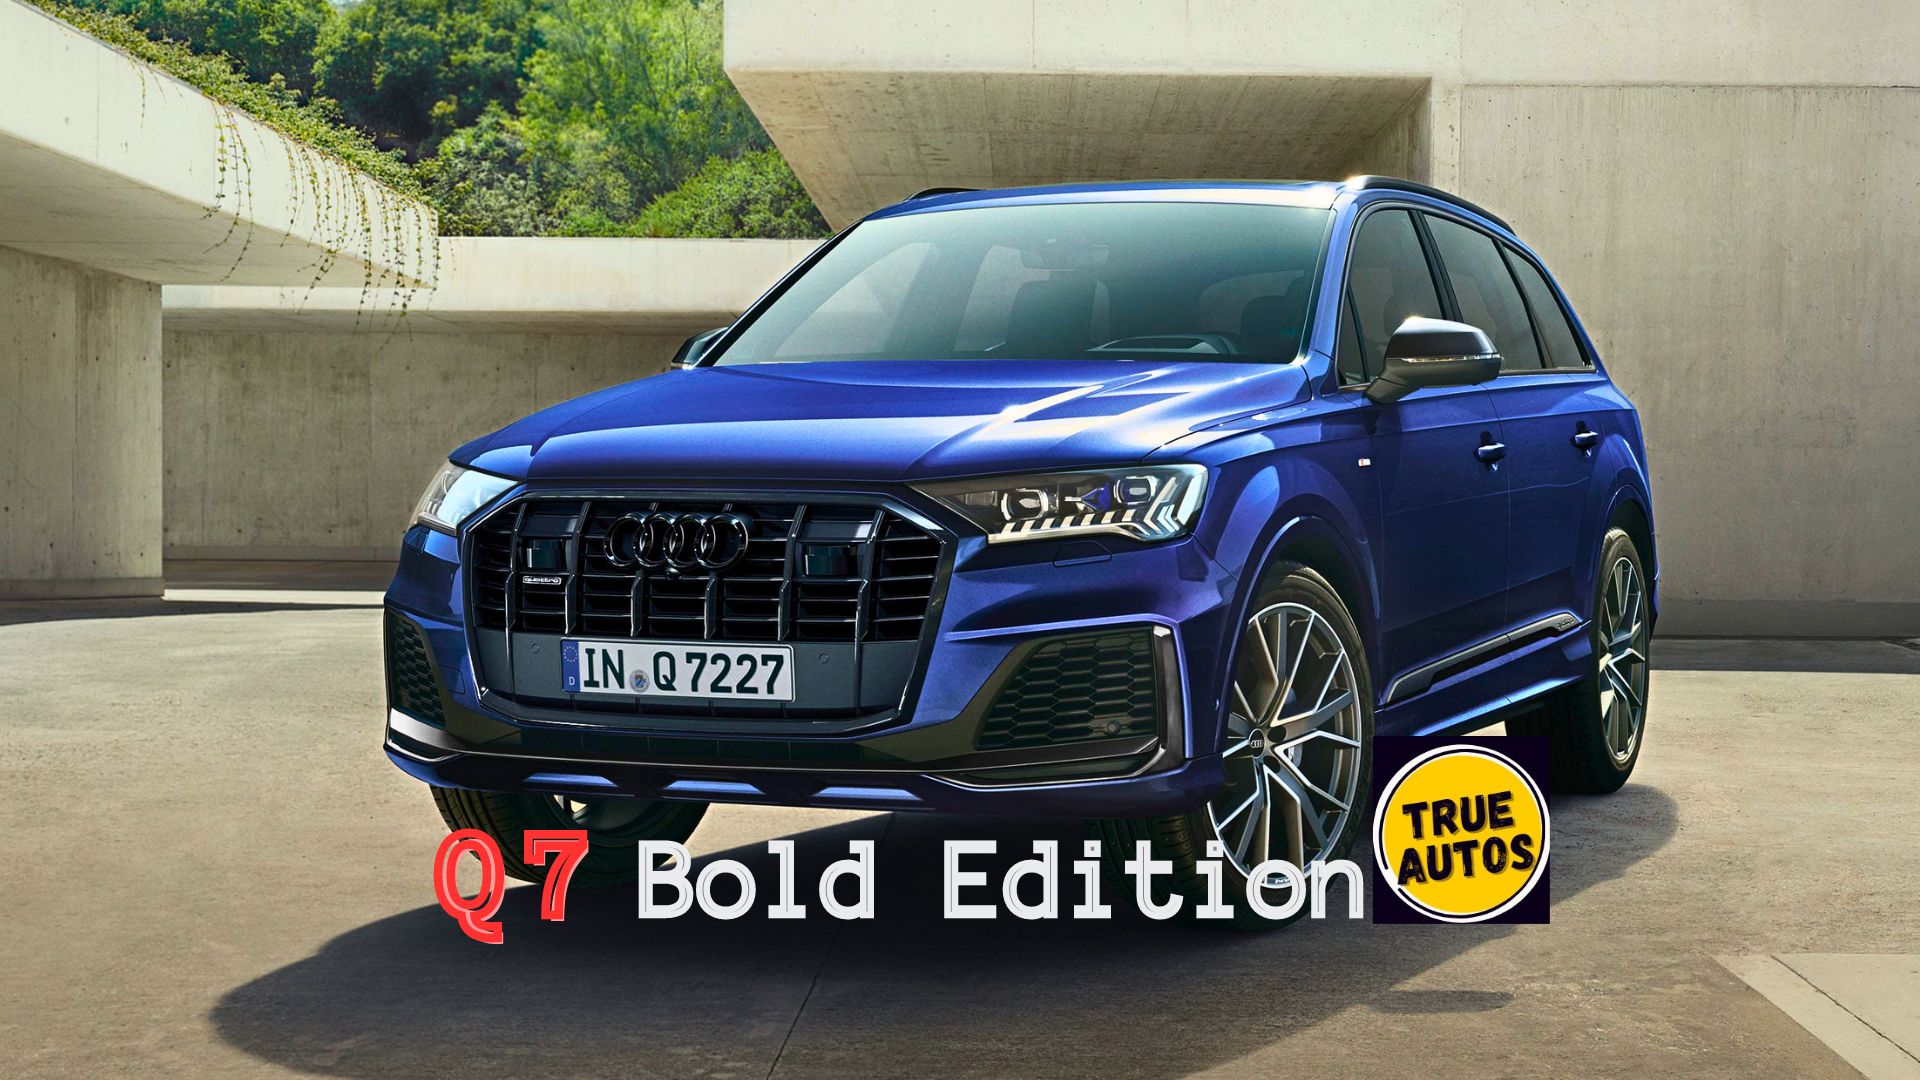 Audi Q7 Bold Edition